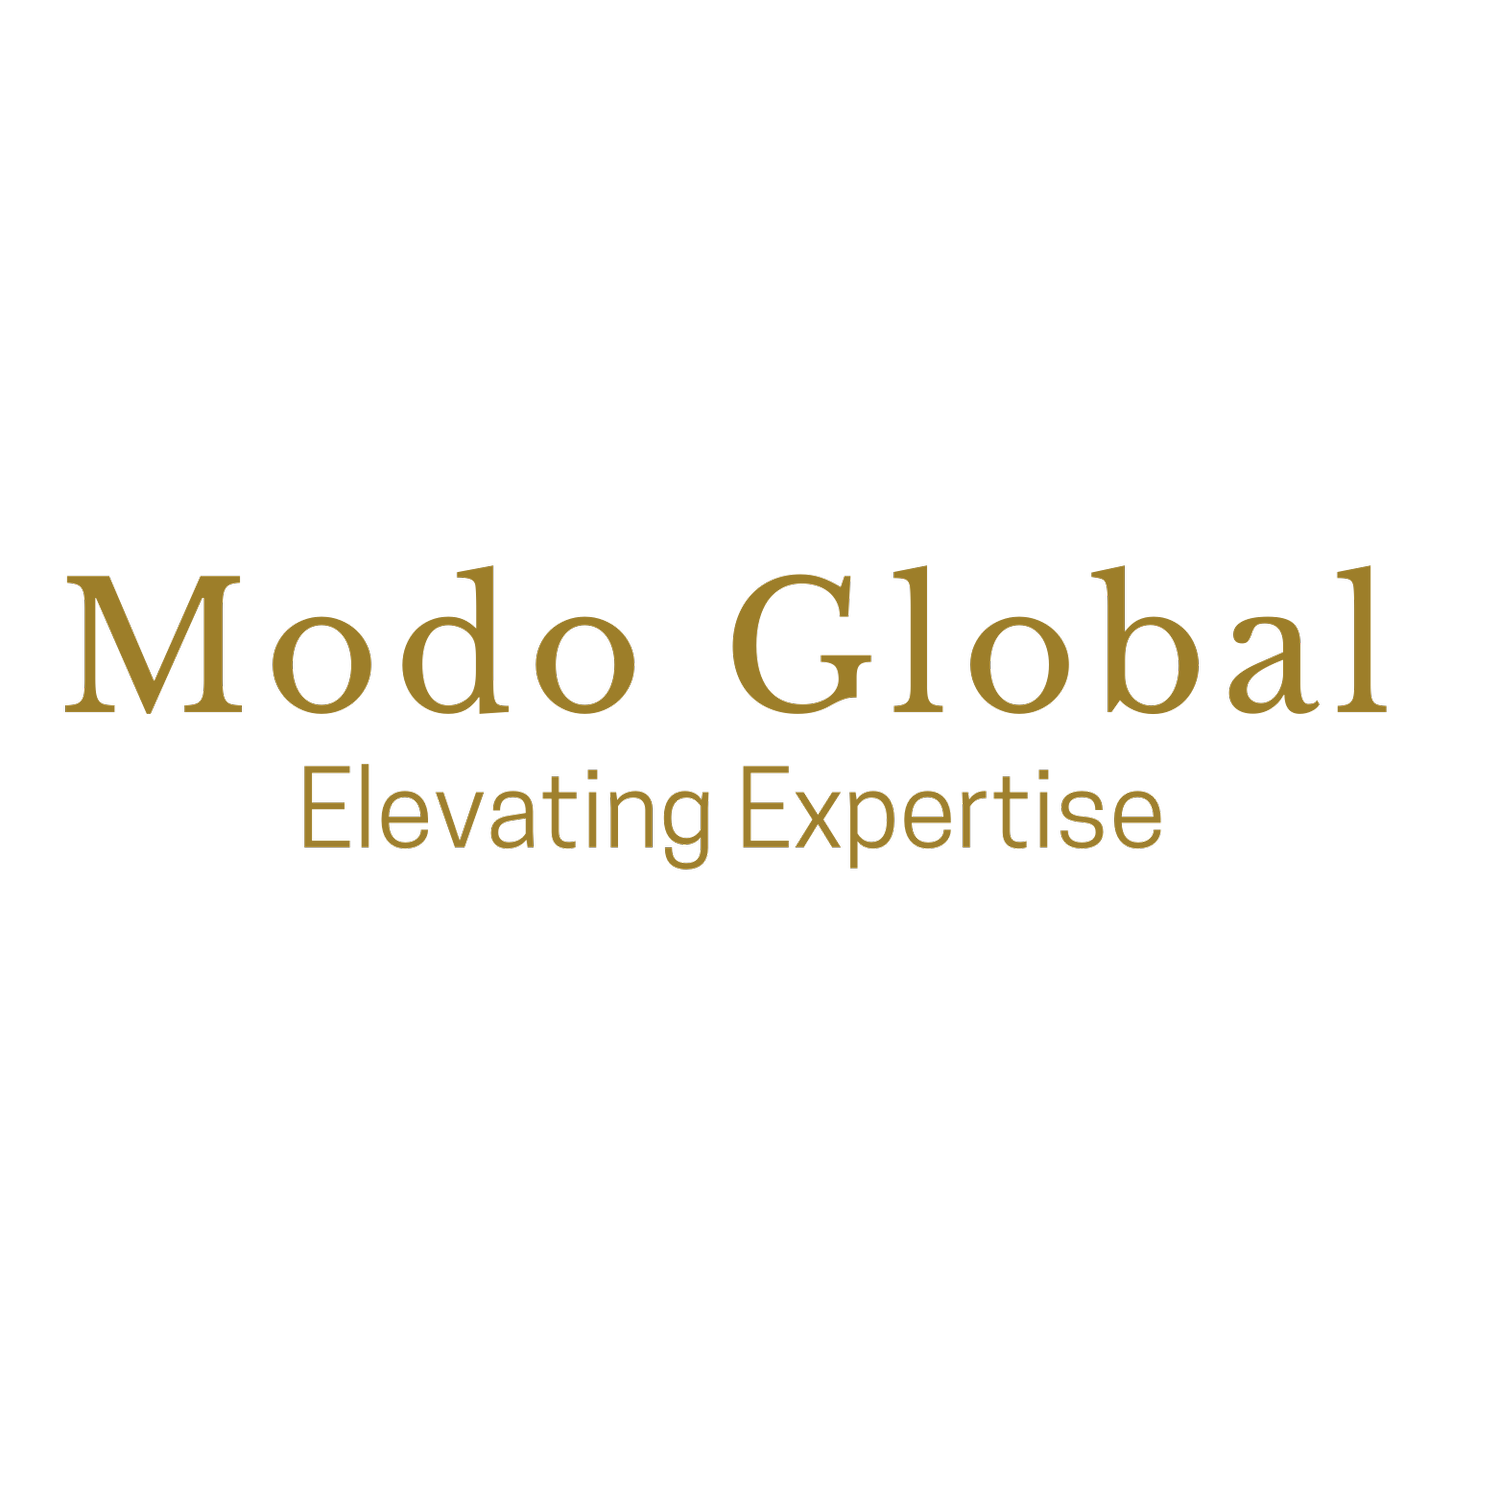 Modo Global